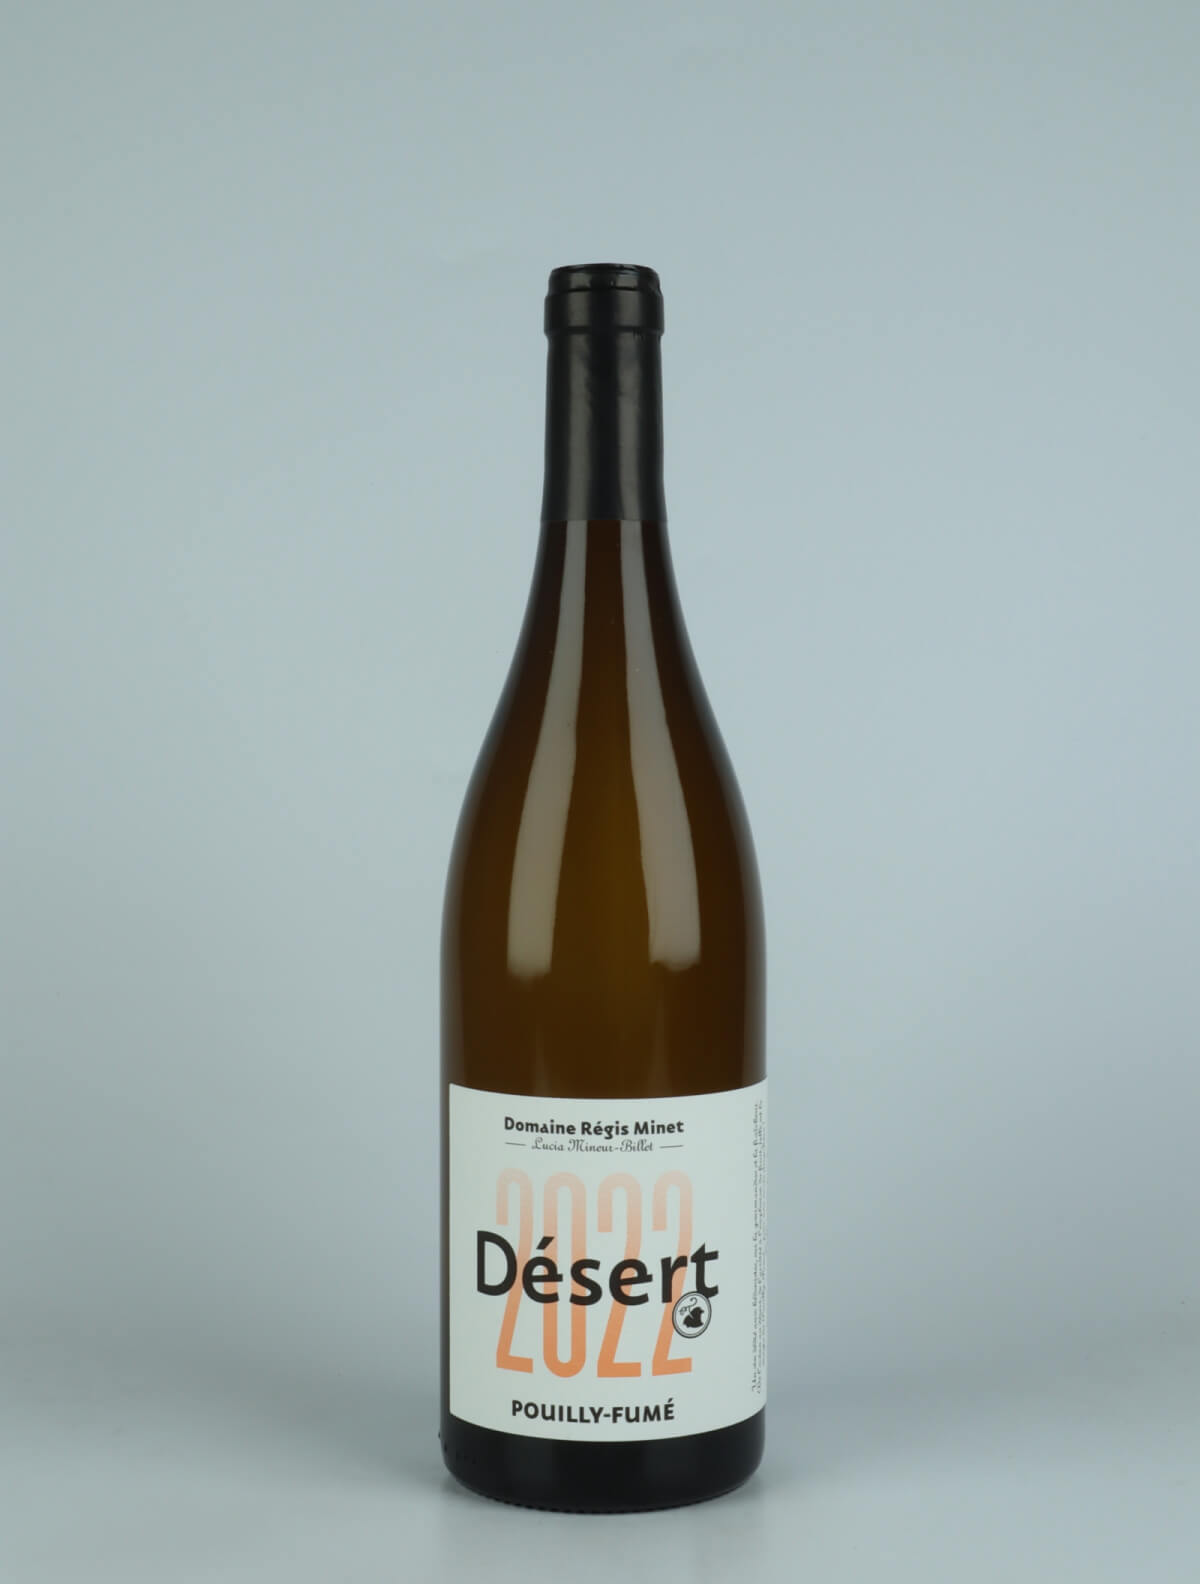 A bottle 2022 Pouilly Fumé - Le Desert White wine from Régis Minet, Loire in France